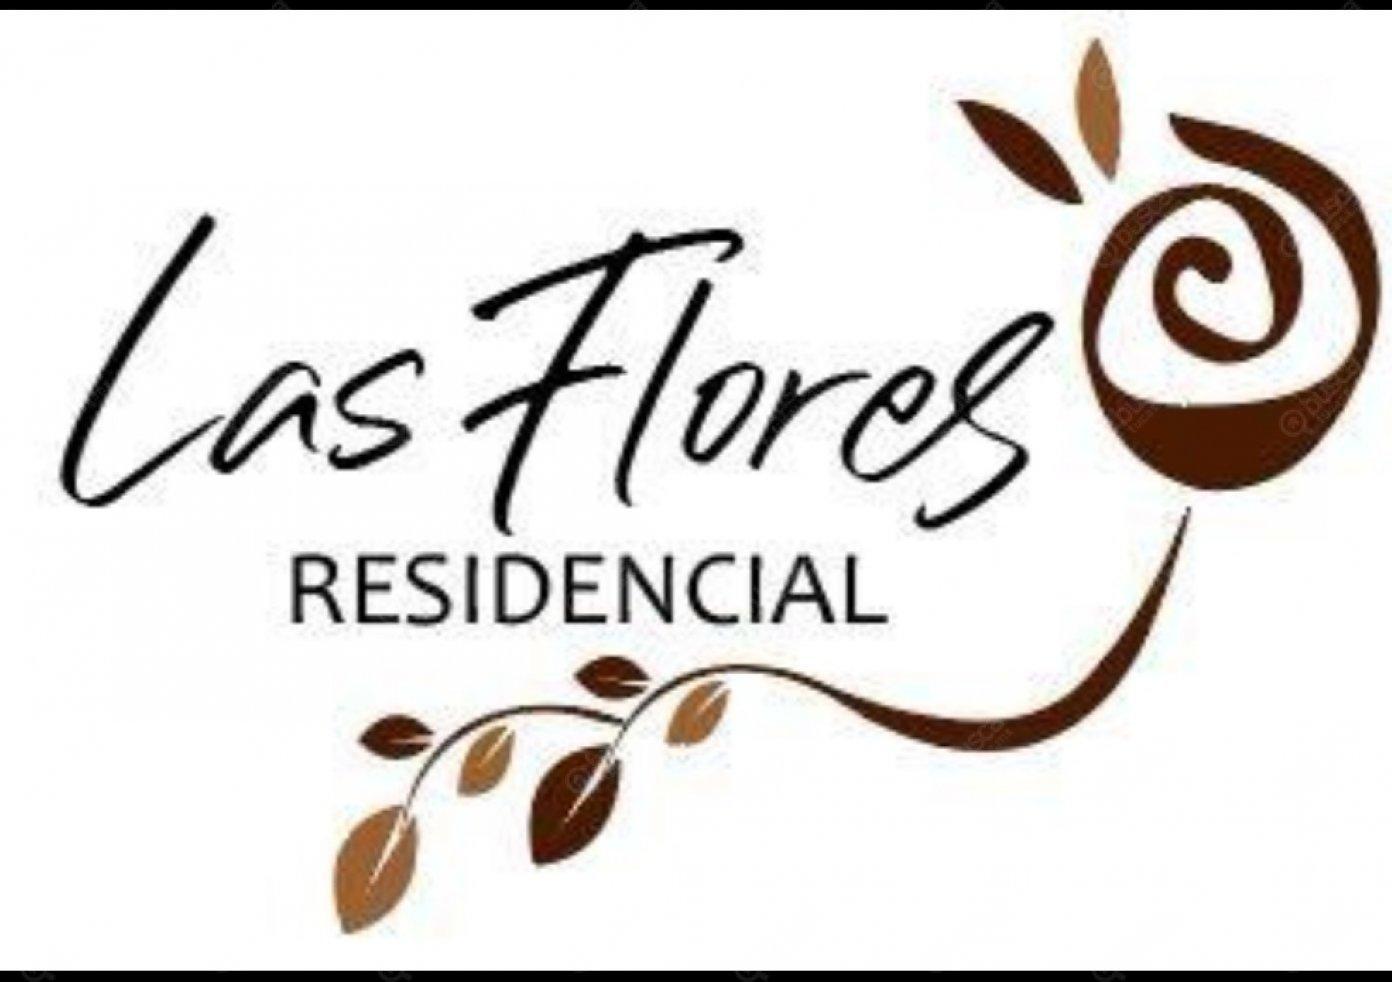 Terreno en Venta Las Flores Residencial, Mazatlán, Sinaloa.